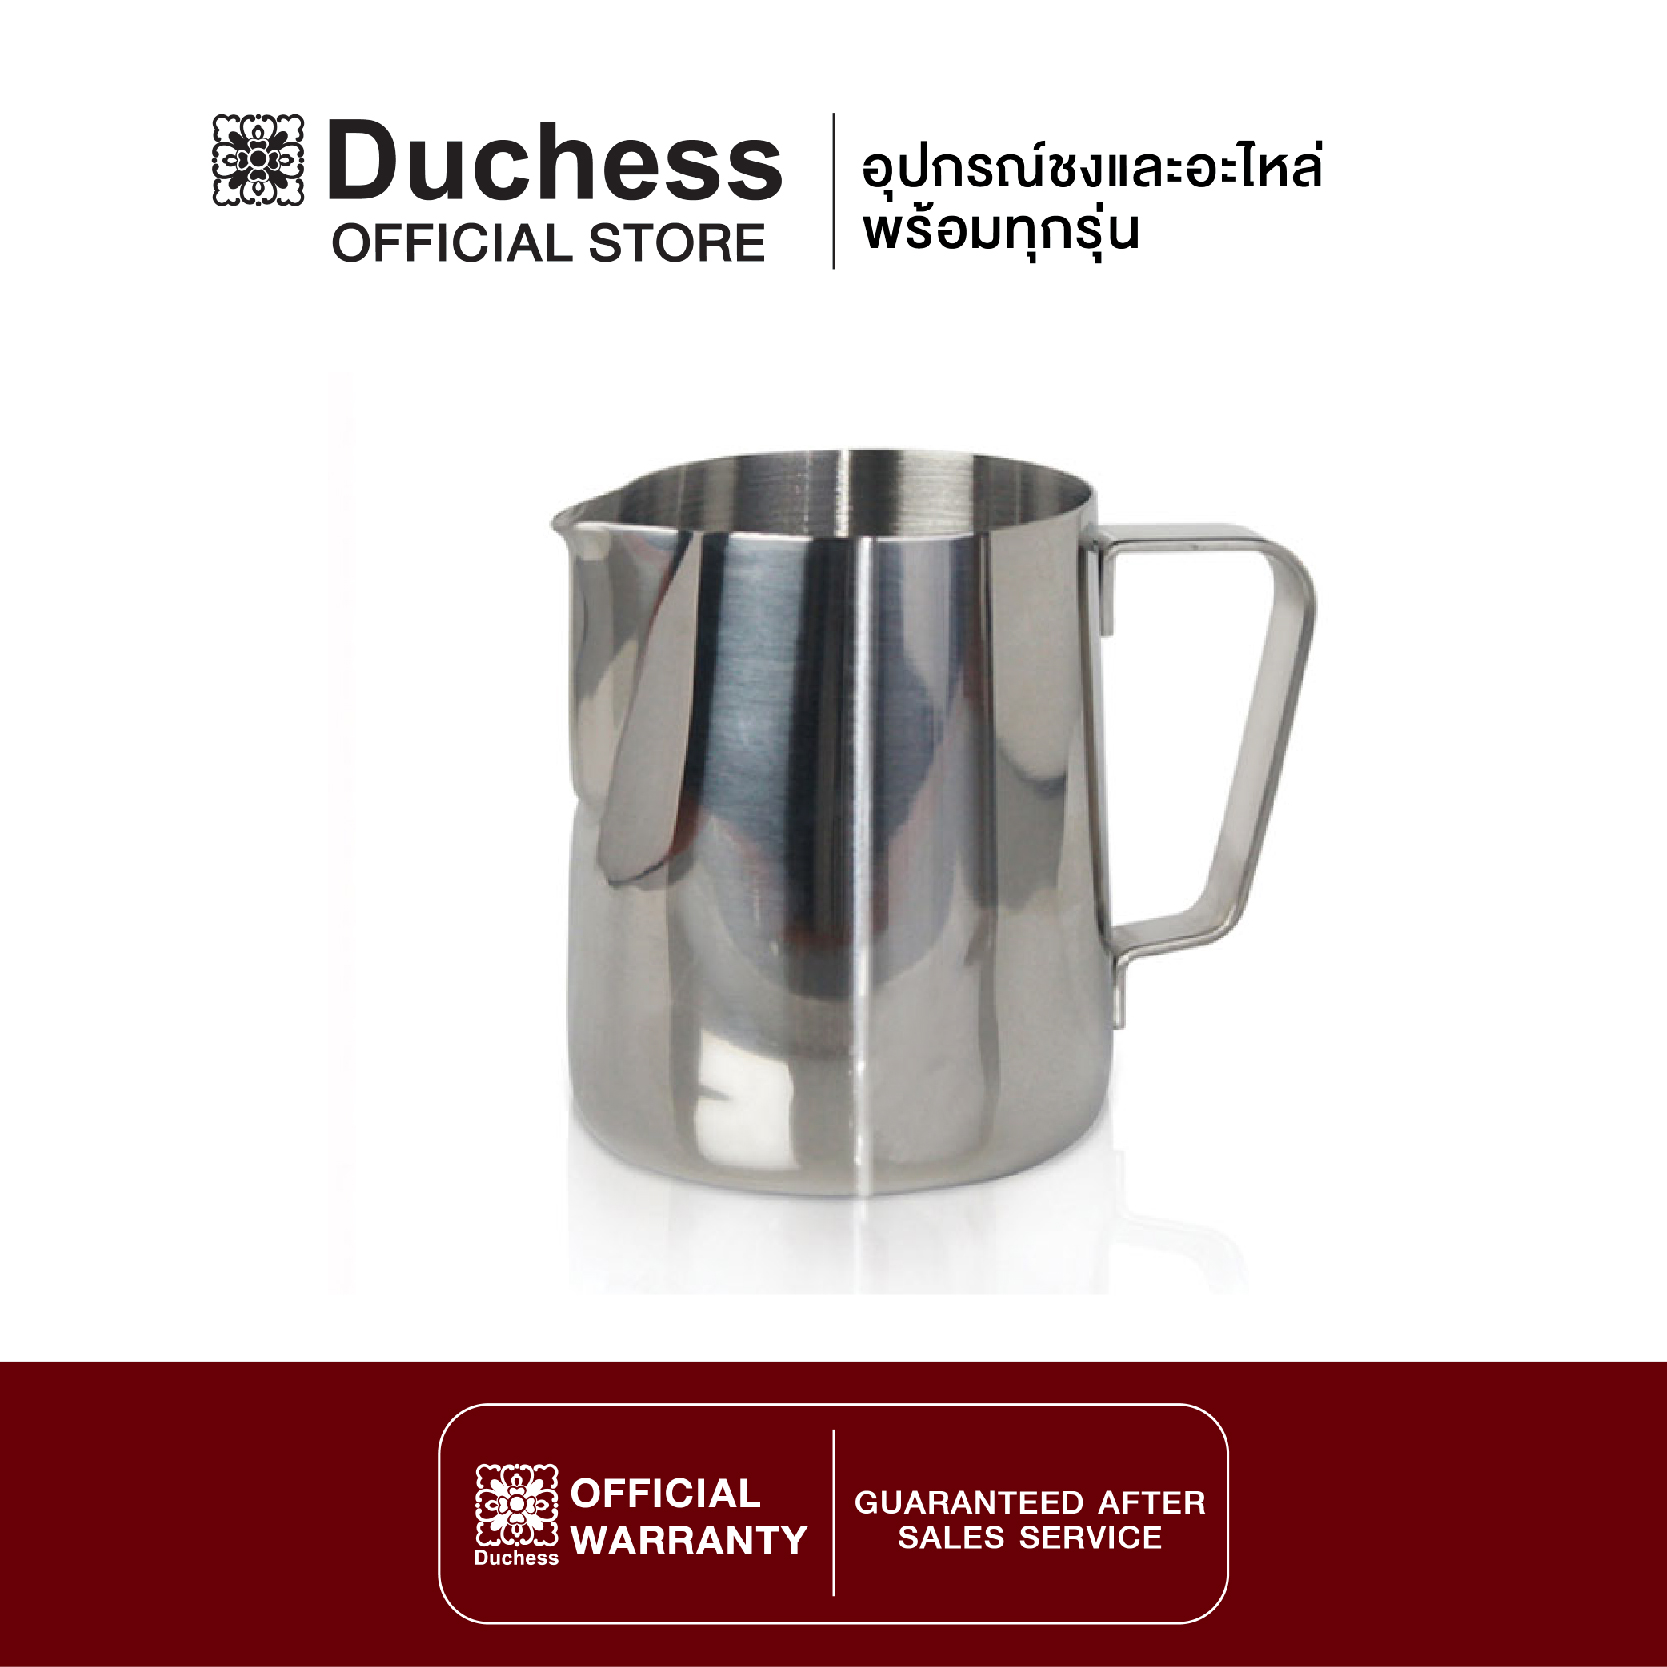 Duchess C040 - เหยือกตีฟองนมสแตนเลส ขนาด 350 ml.